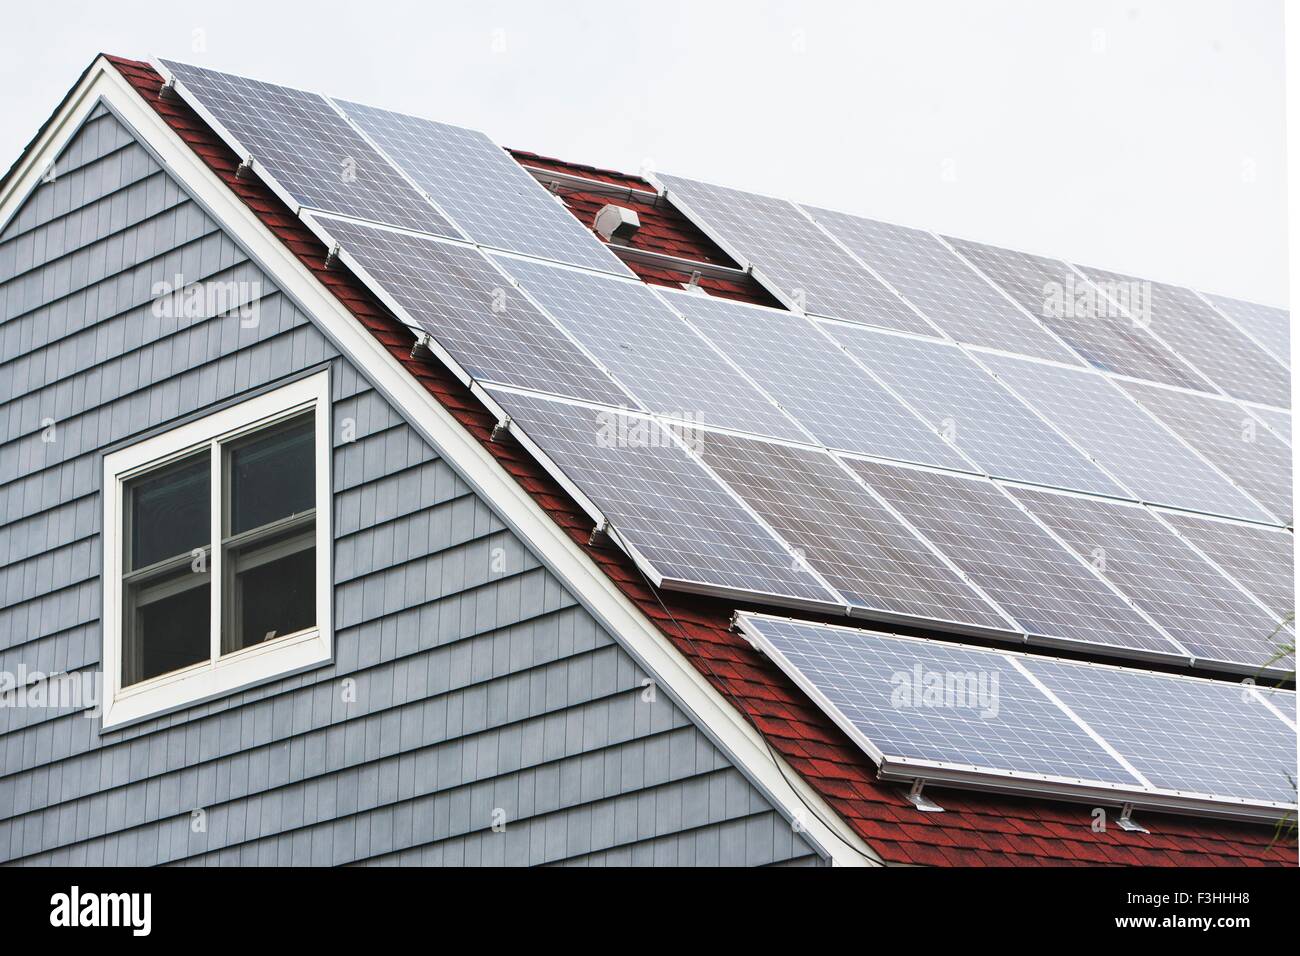 Solar panelled roof, Long Beach, New York, USA Stock Photo